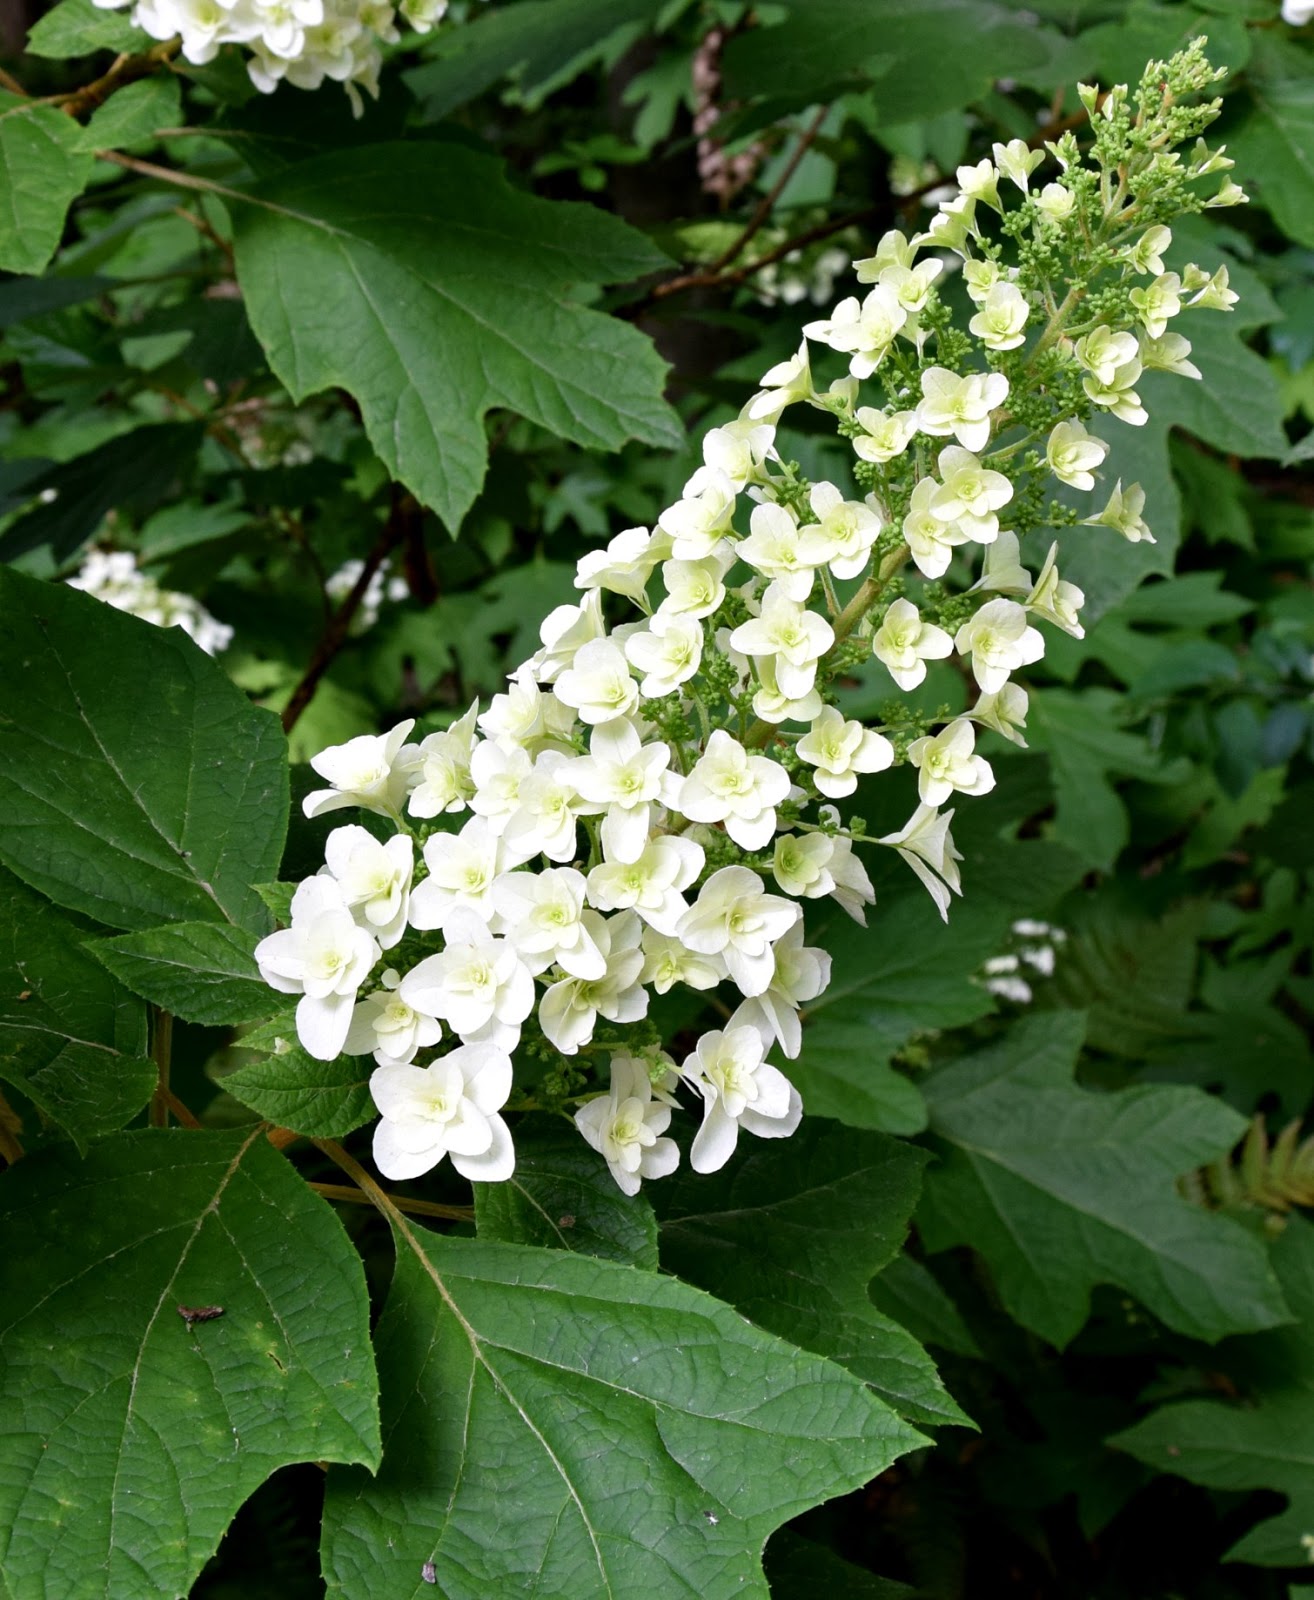 hydrangea oakleaf plants georgia native shrub flowering season four using